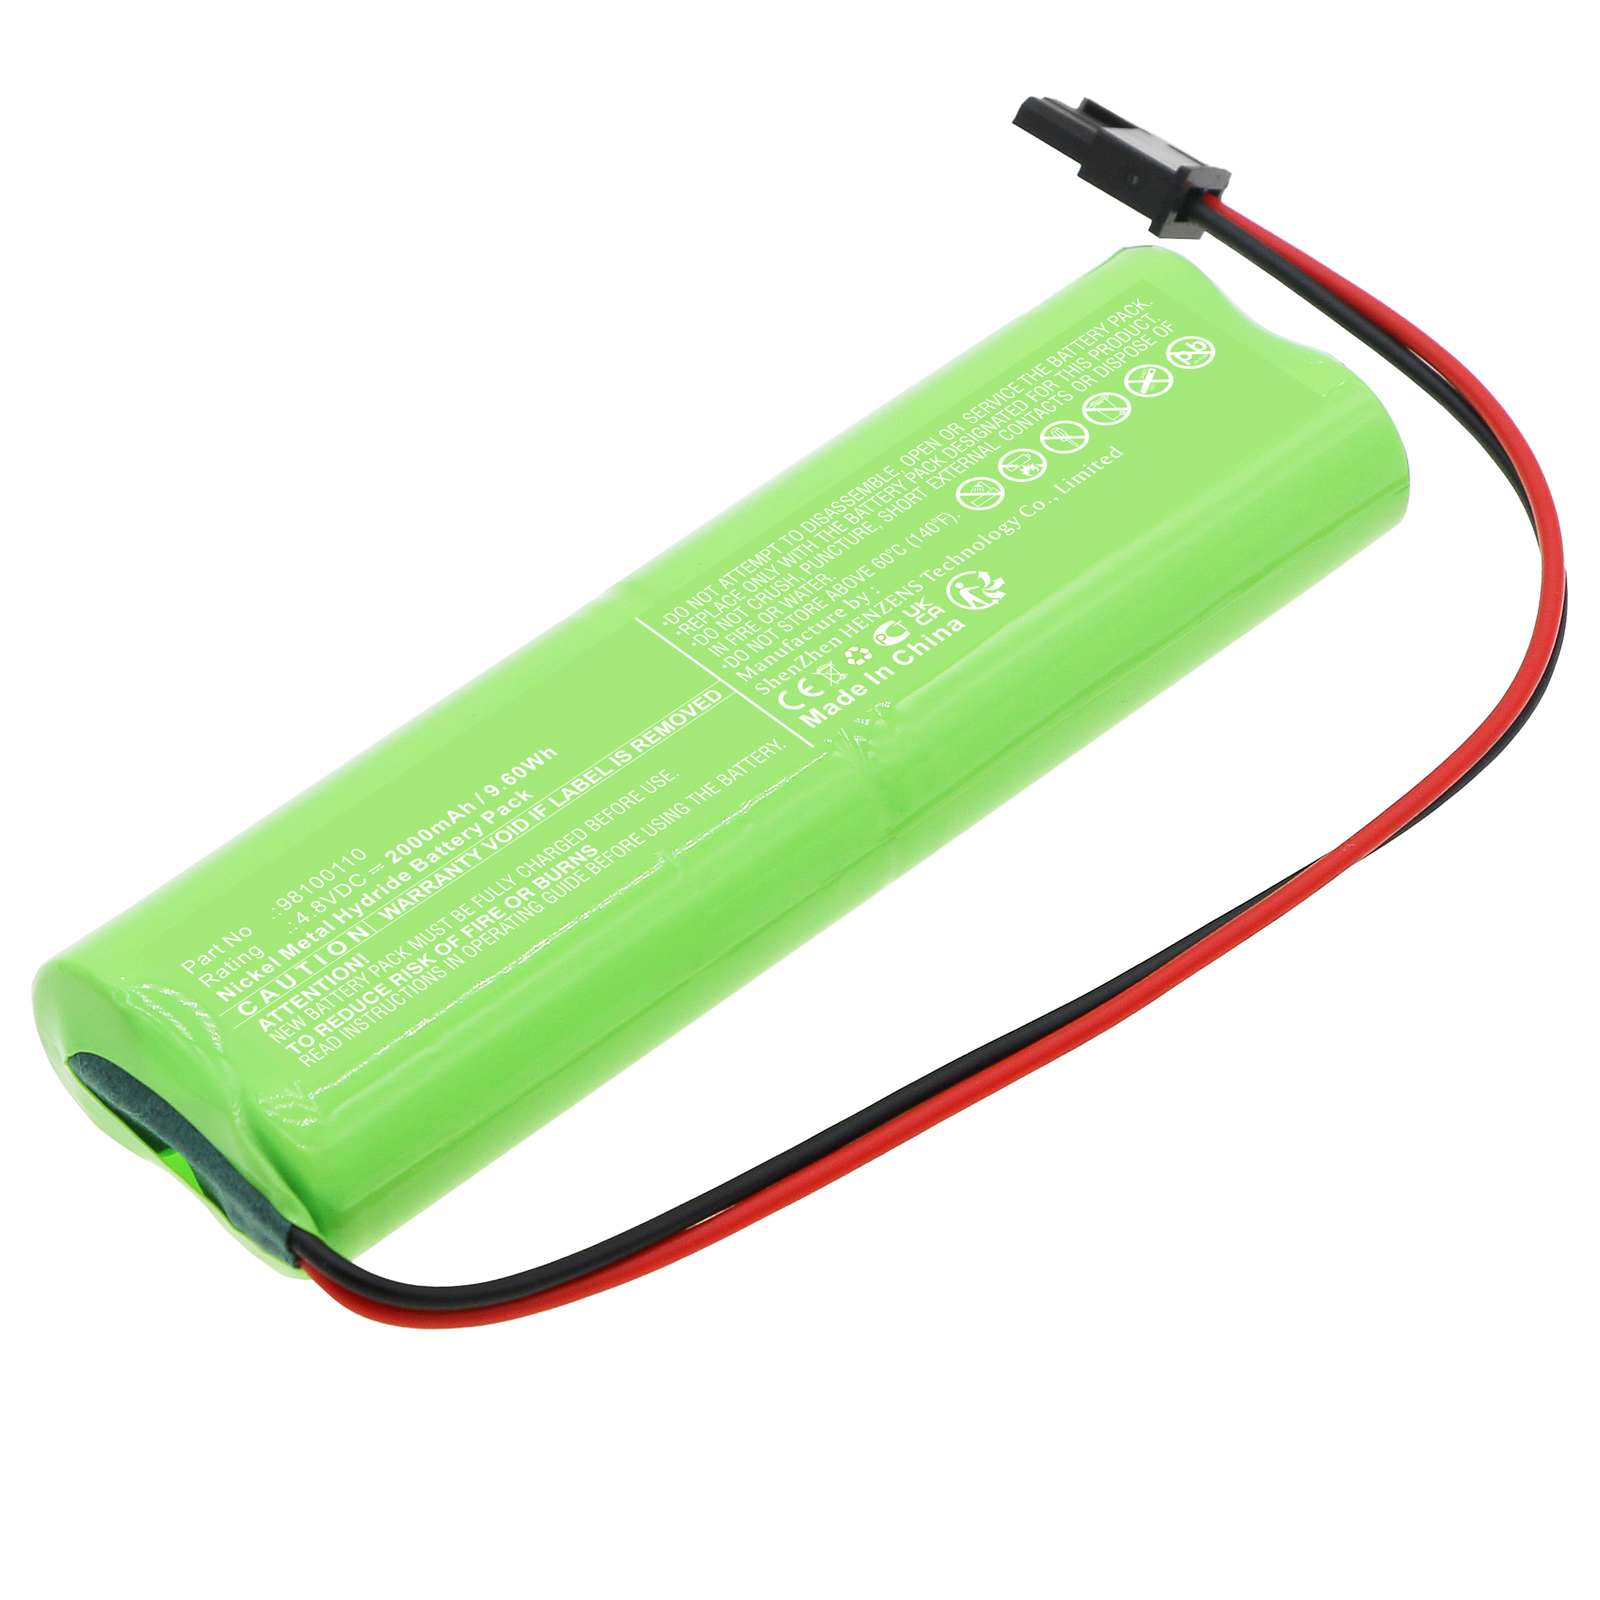 Batteries for InotecEmergency Lighting